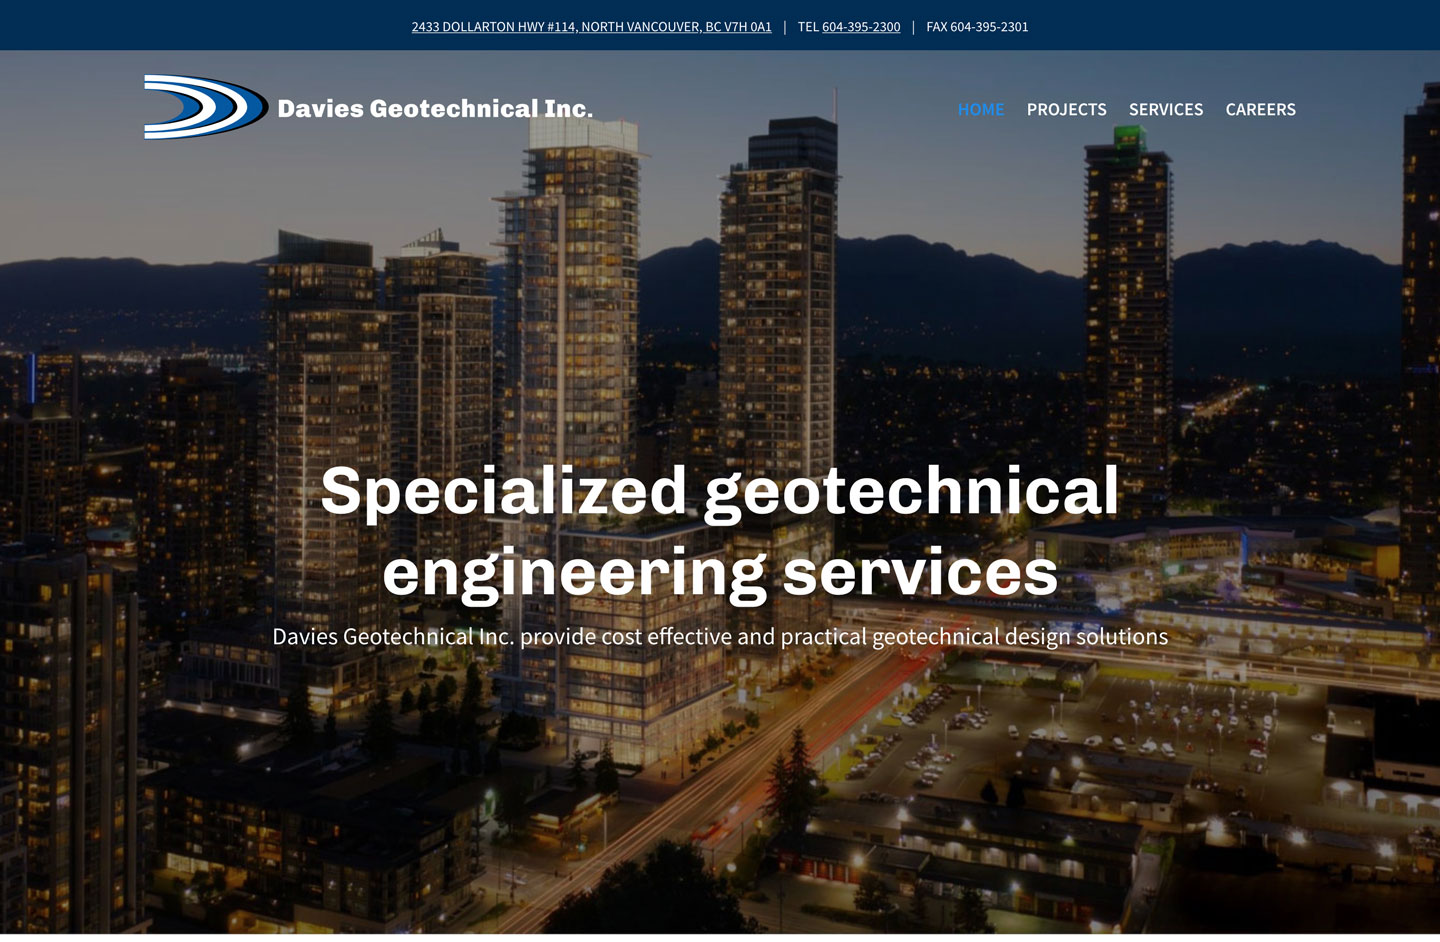 Davies Geotechnical Inc home page WordPress